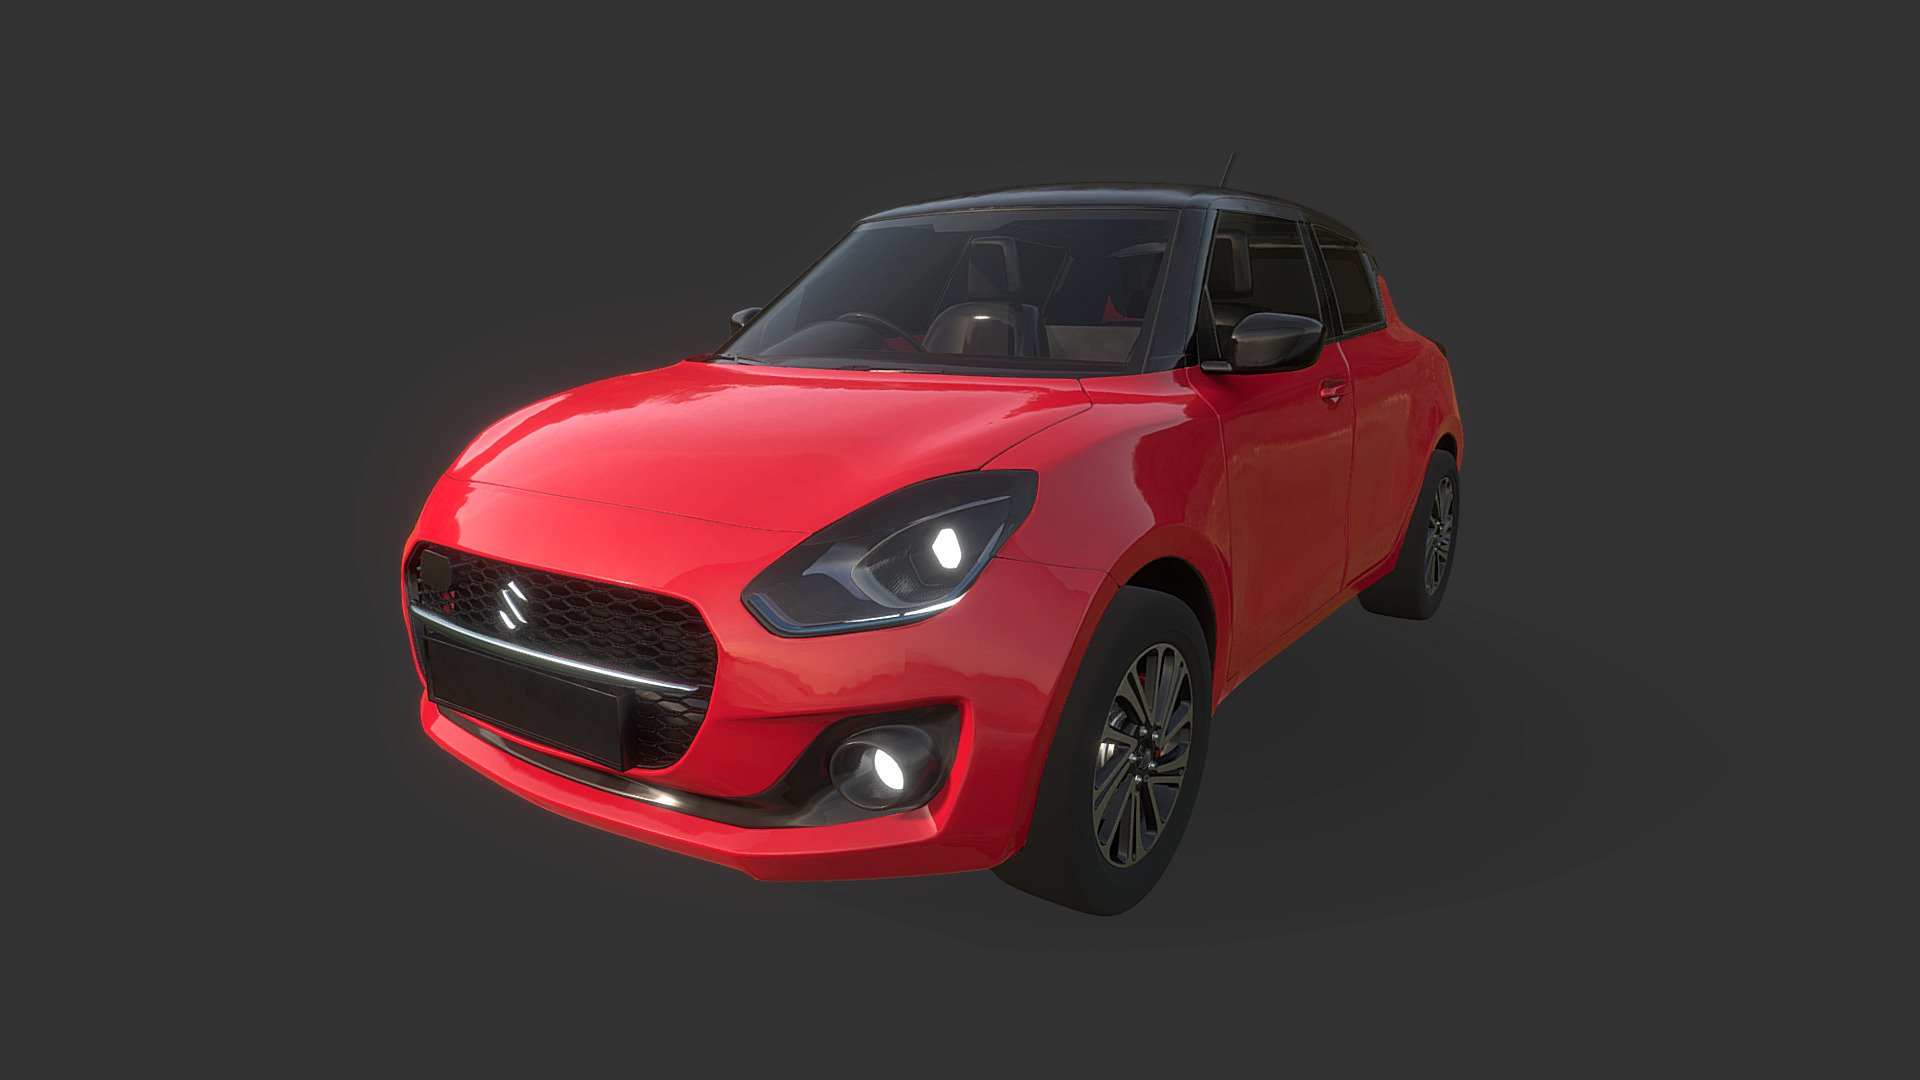 -Medium poly exterior model of Suzuki swift
-Basic interior 
-suitable for archi renderings, game assets etc - Suzuki swift 2018 model - 3D model by jineshbhaskaran (@arcdesignz) 3d model